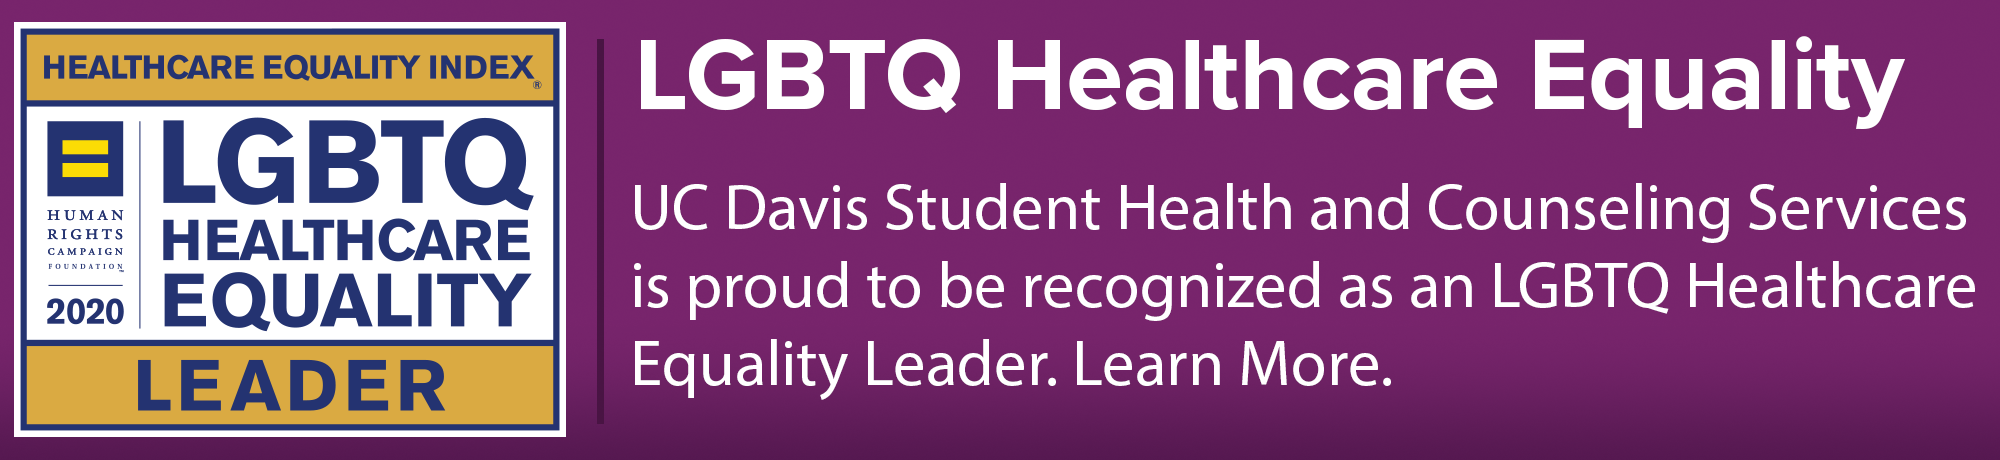 LGBTQ Healthcare Equality Leader 2020 Banner